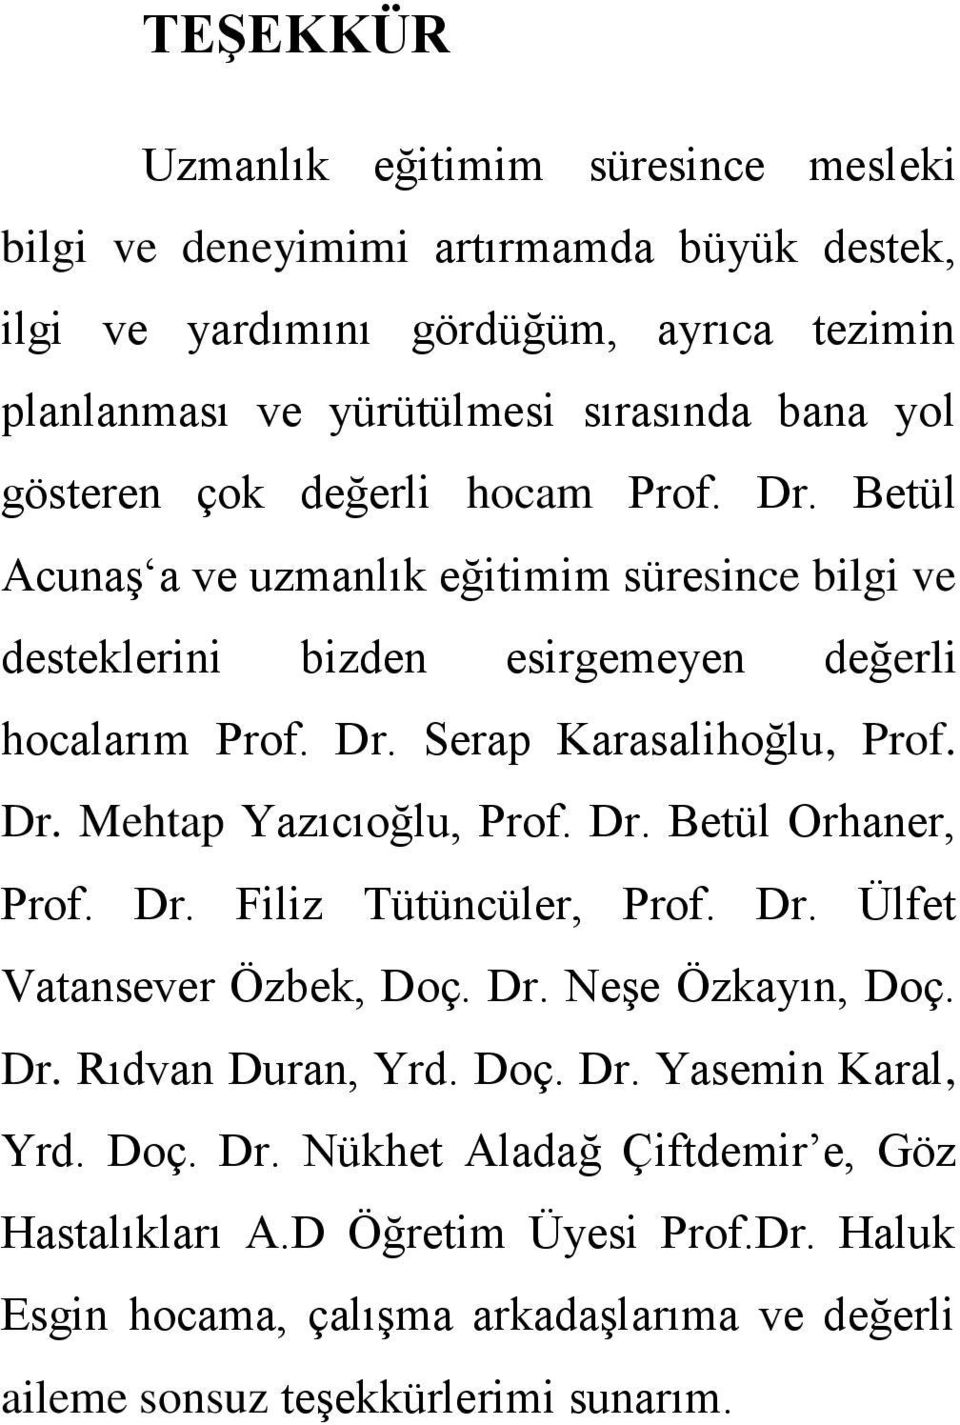 Dr. Mehtap Yazıcıoğlu, Prof. Dr. Betül Orhaner, Prof. Dr. Filiz Tütüncüler, Prof. Dr. Ülfet Vatansever Özbek, Doç. Dr. Neşe Özkayın, Doç. Dr. Rıdvan Duran, Yrd. Doç. Dr. Yasemin Karal, Yrd.